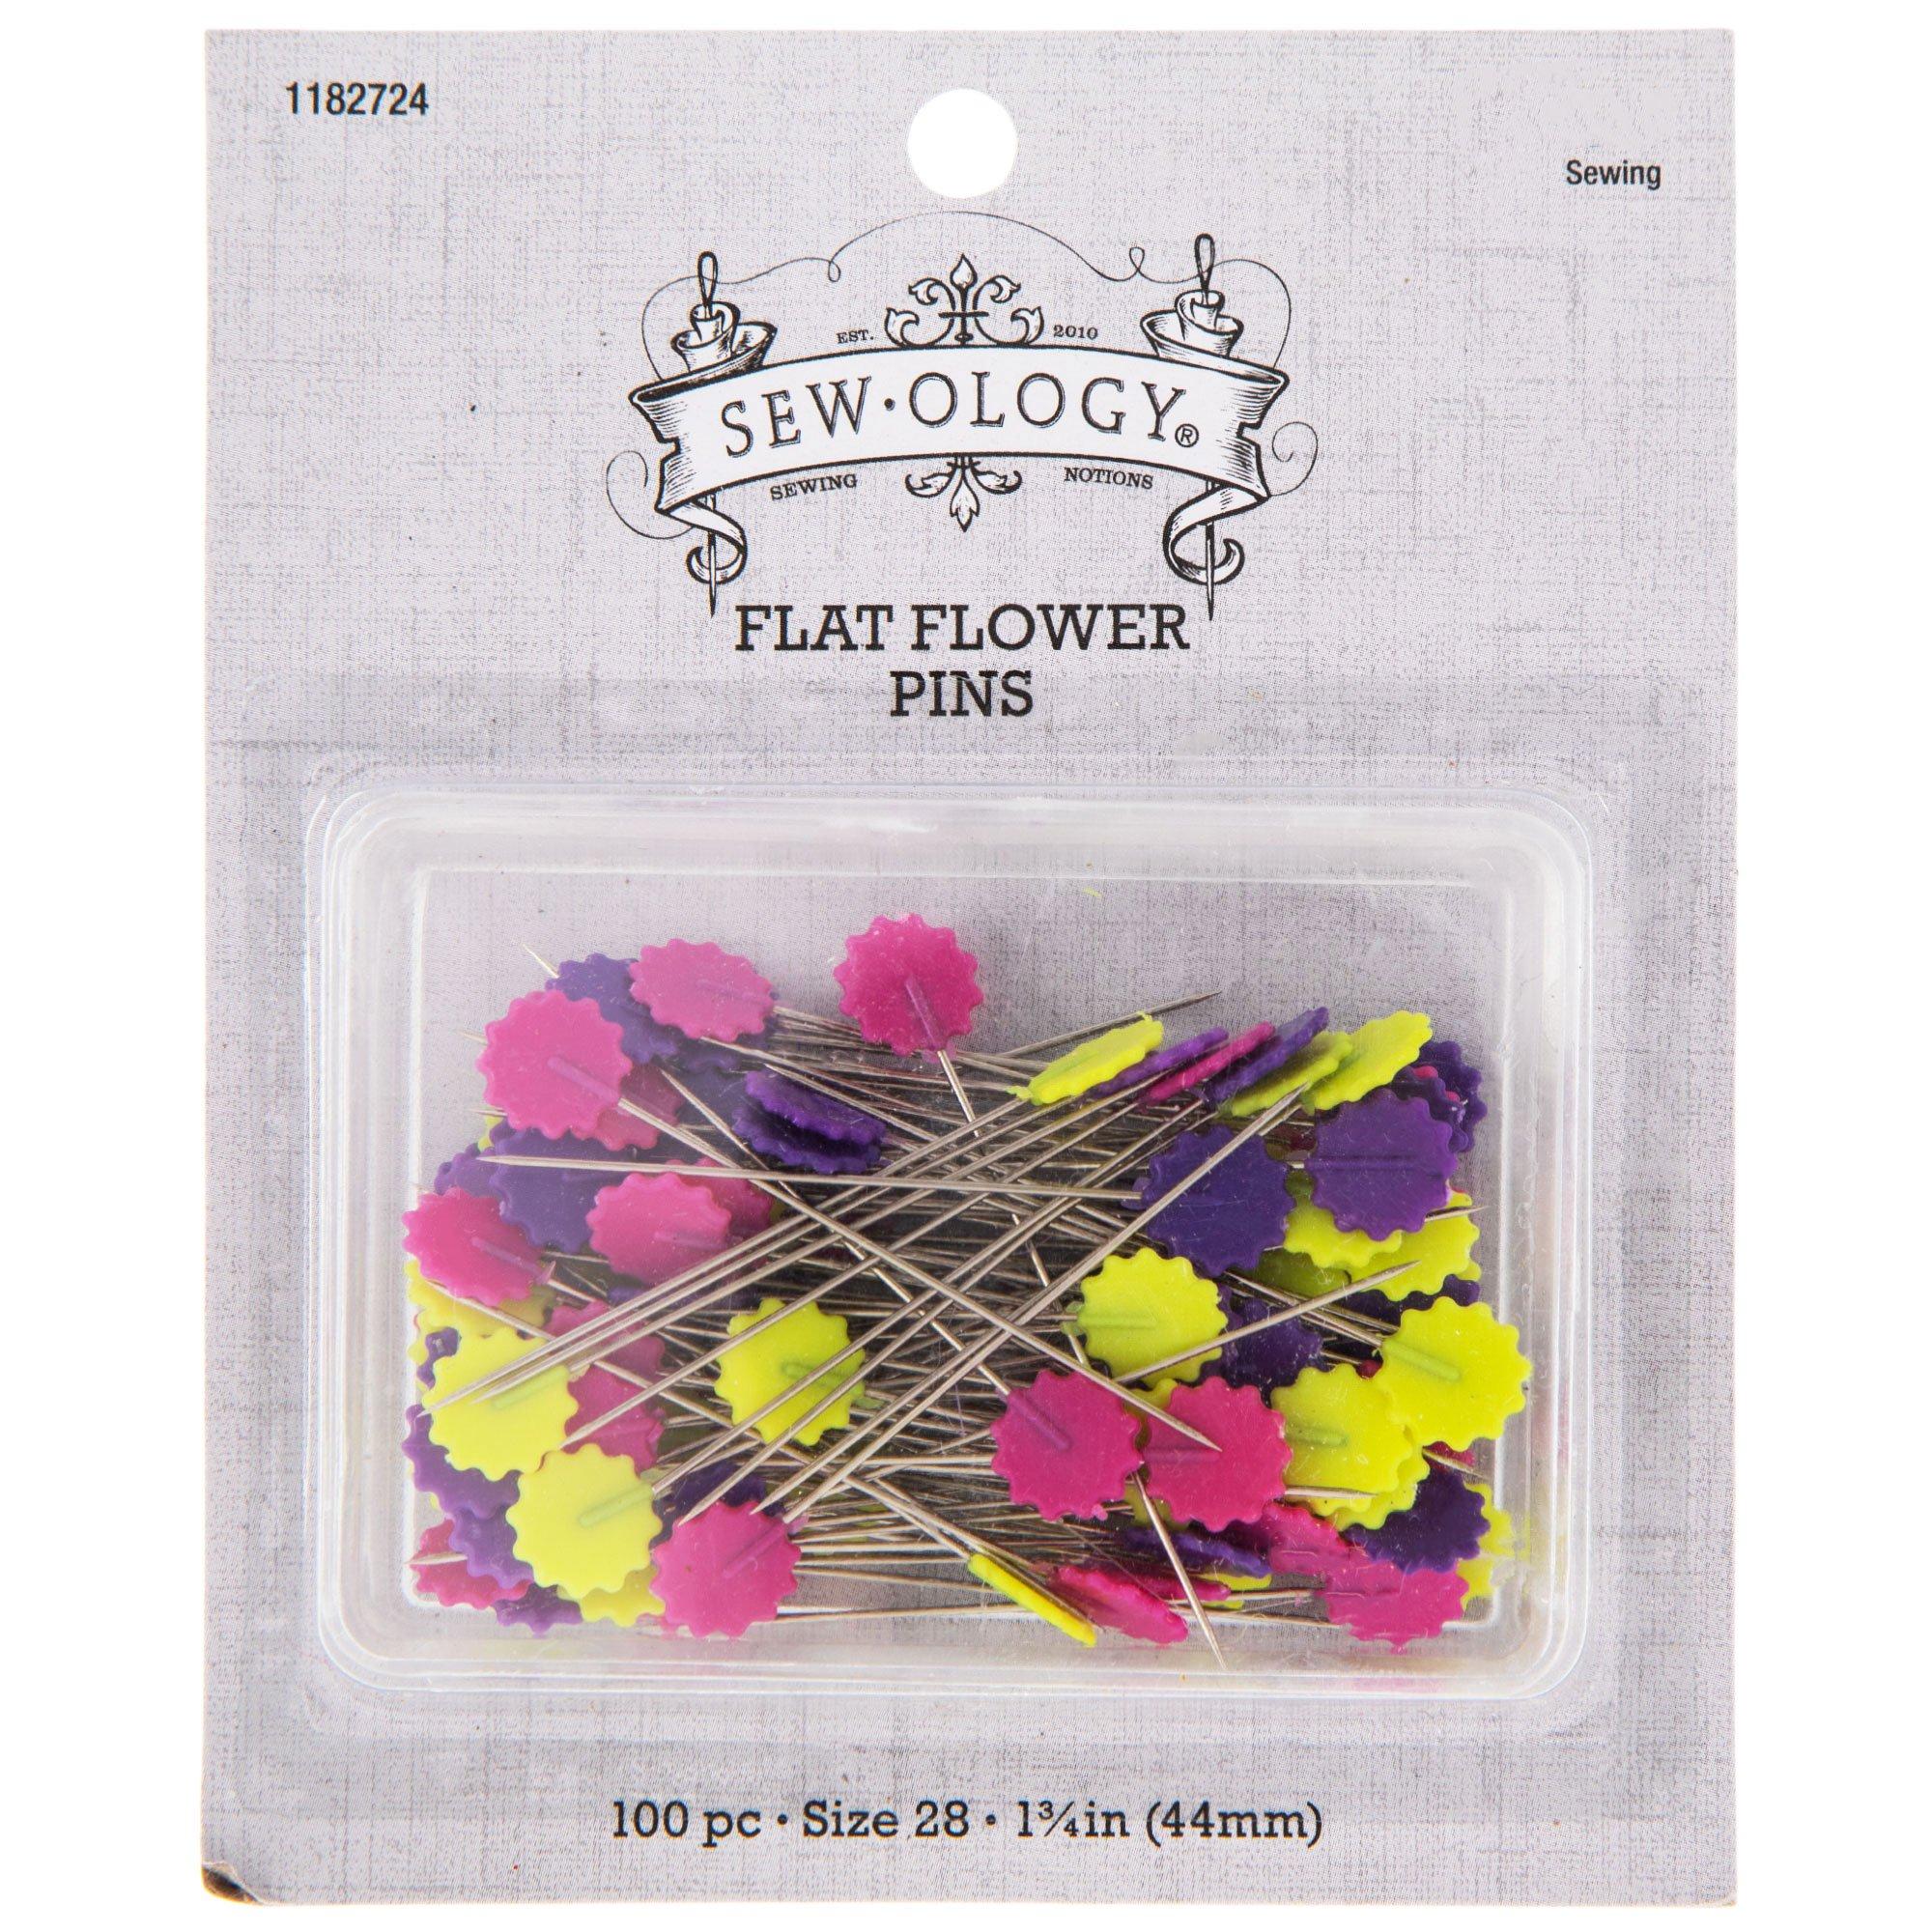 Quilter's Flat Flower Pins